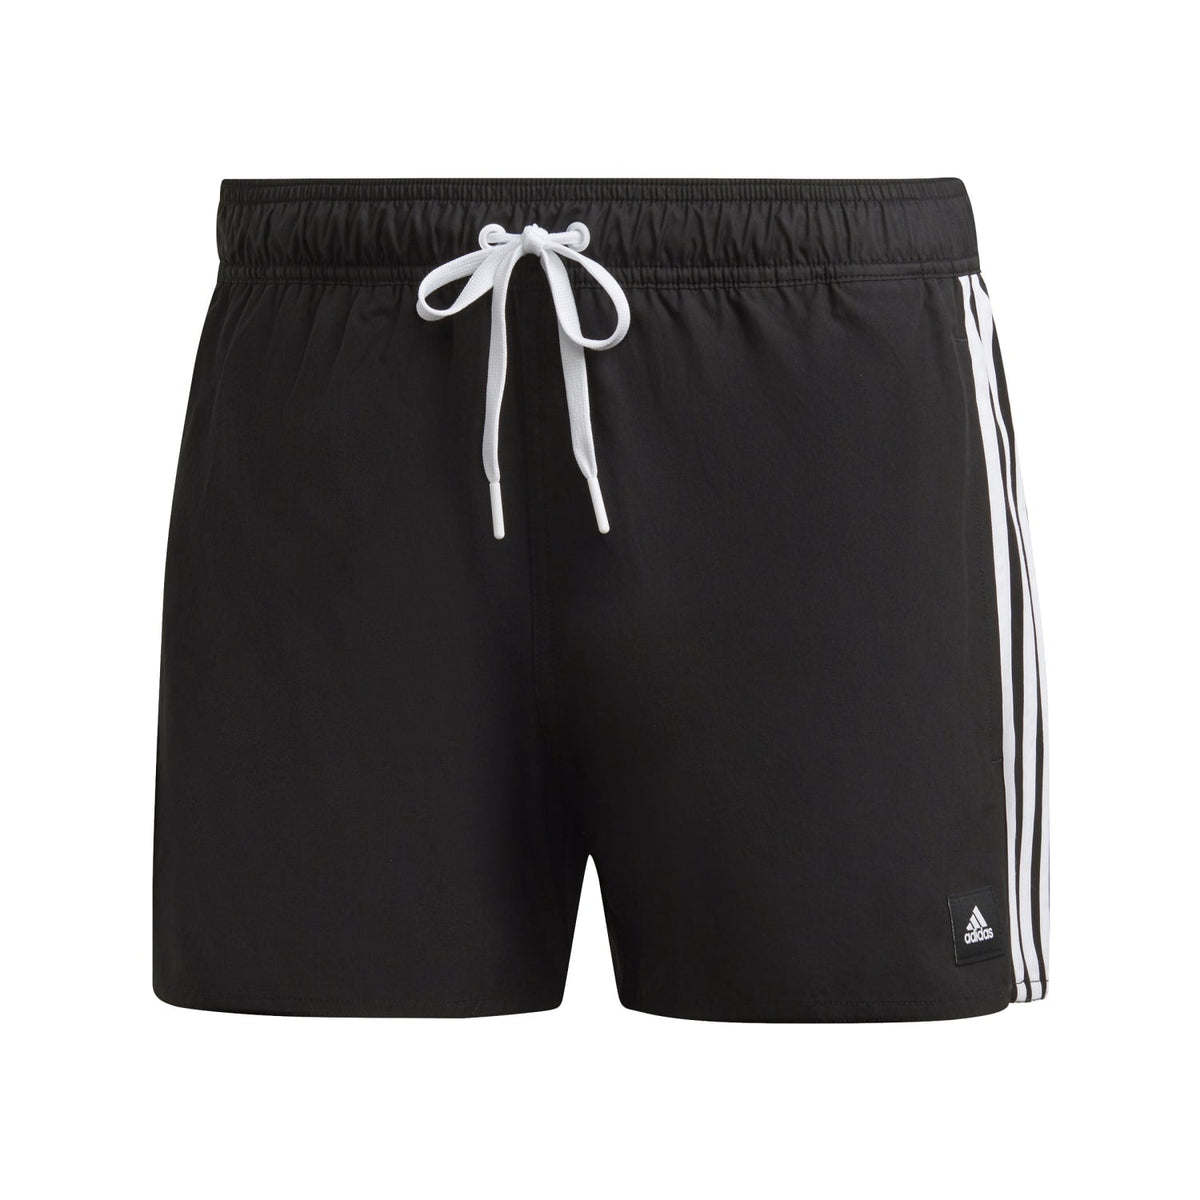 Adidas Men 3-Stripes CLX Swim Shorts Black HT4367 - SHORTS - Canada